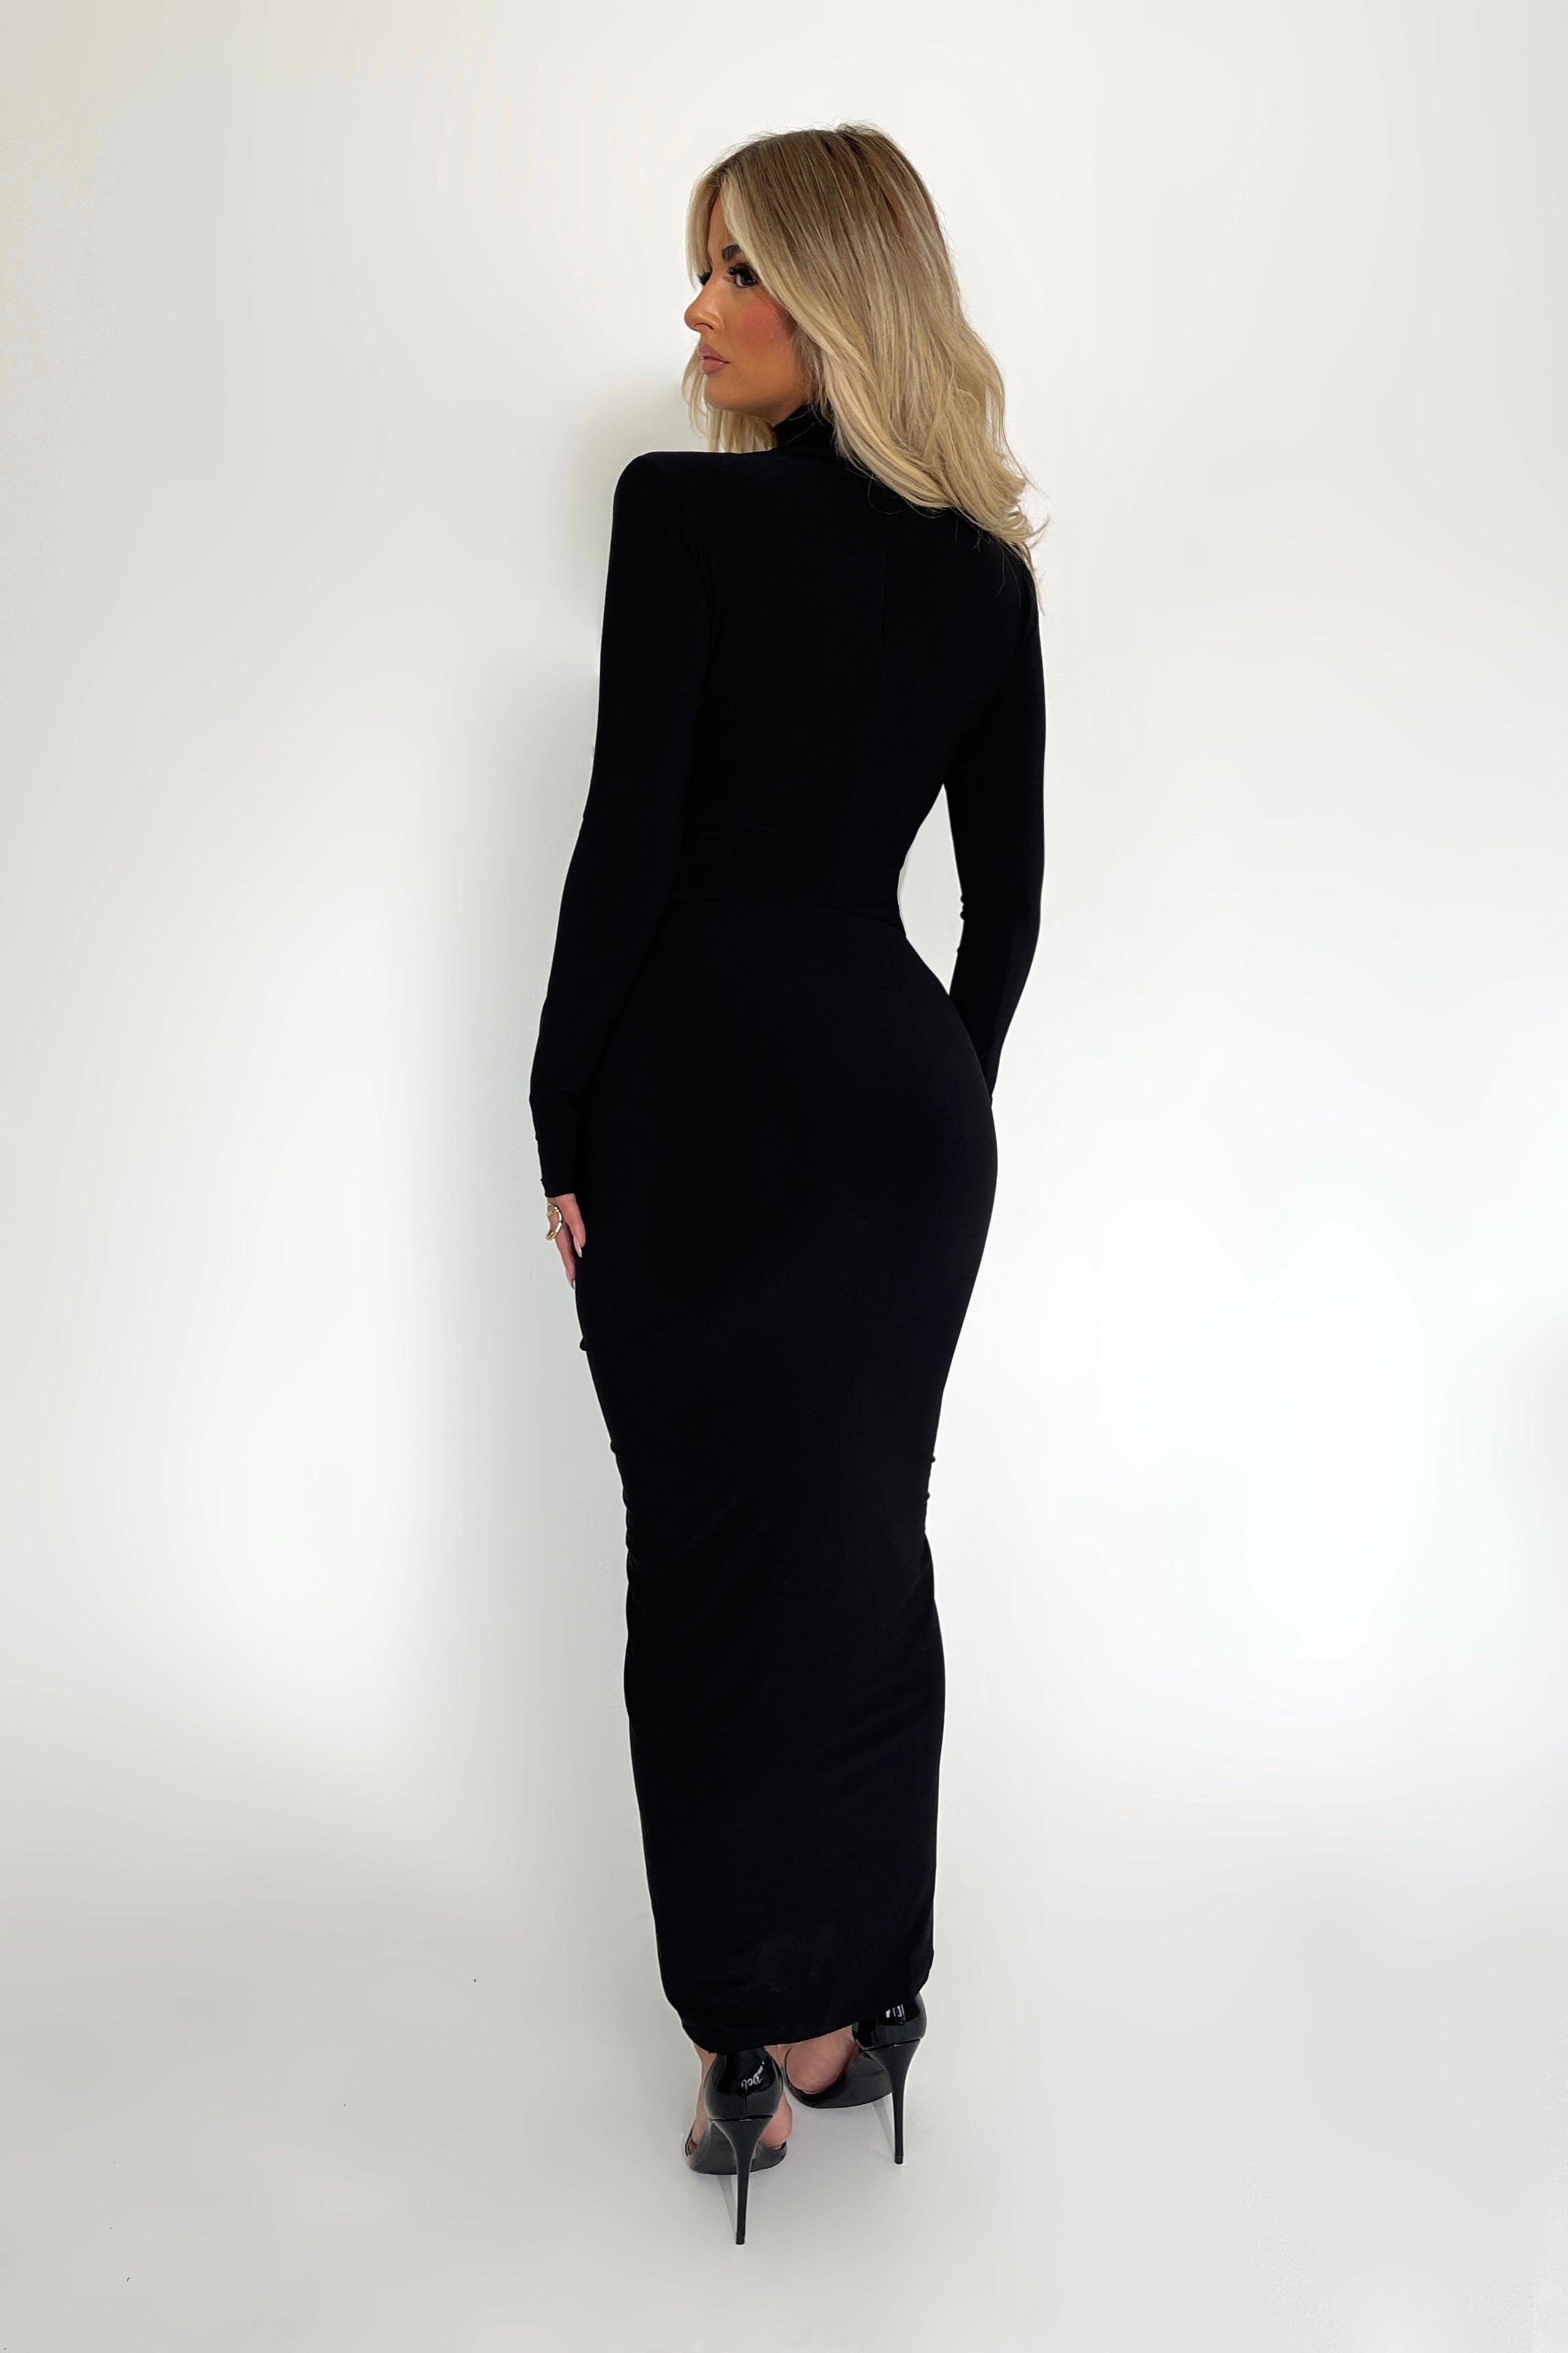 Eloise Black Dress